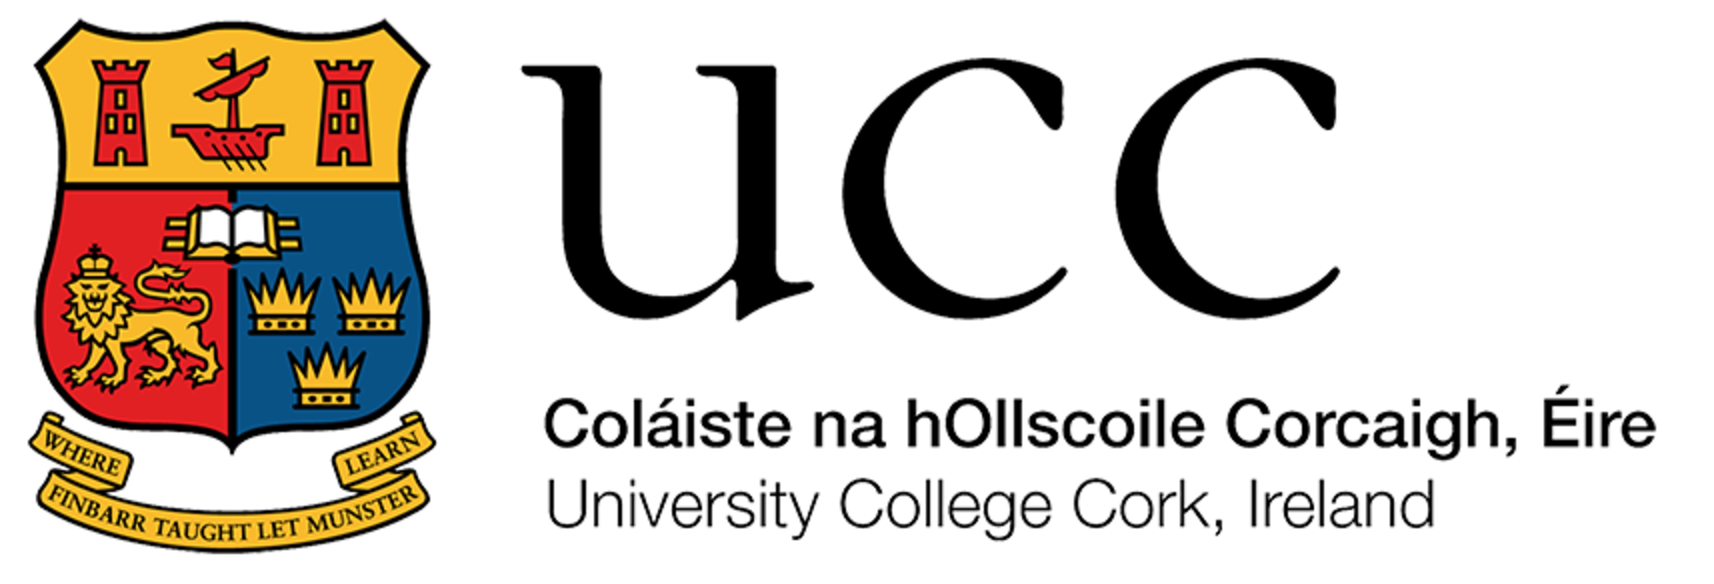 Sponsorpitch & University College Cork